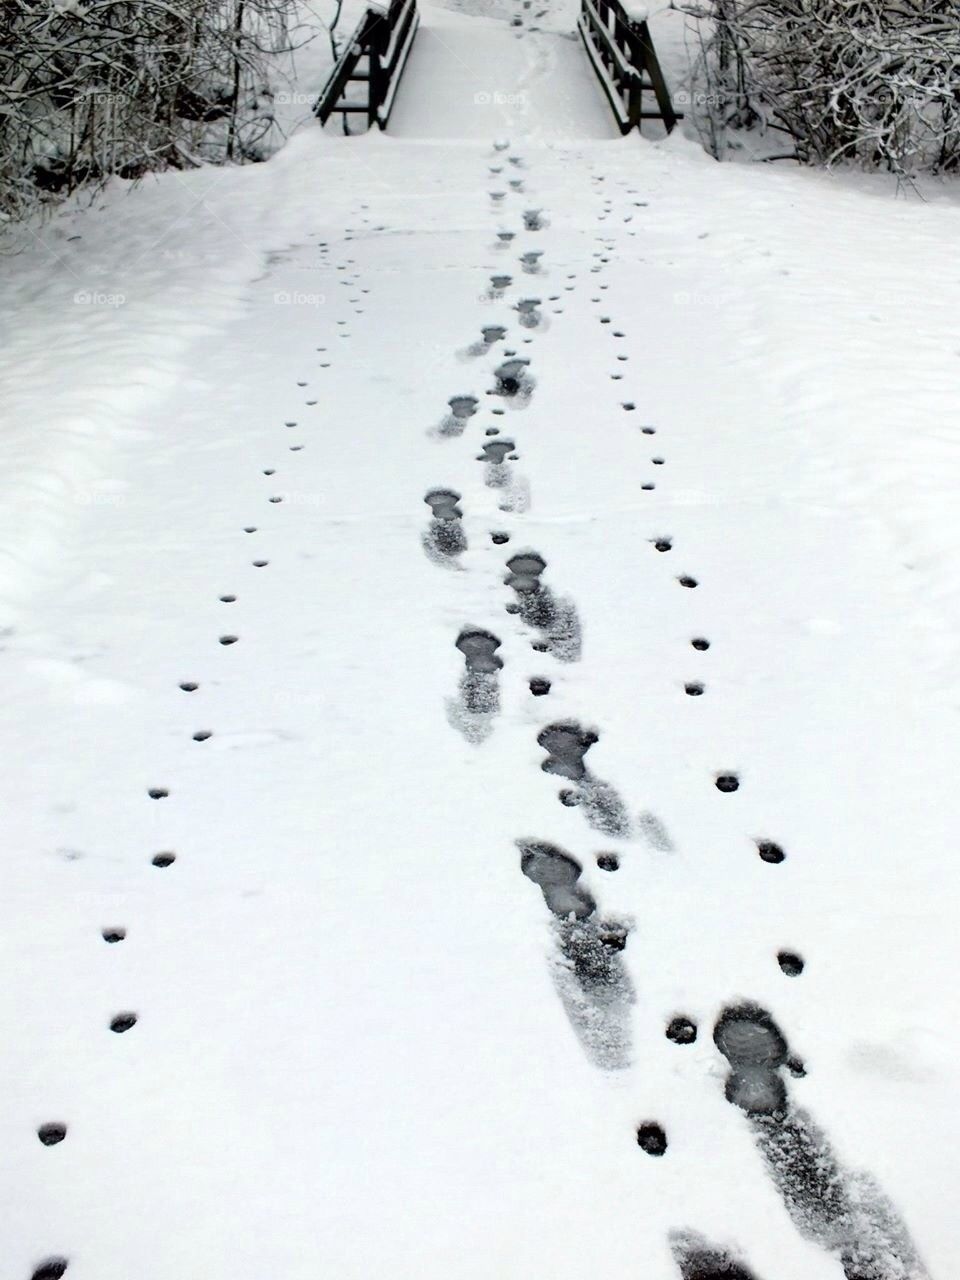 Snowy footprints